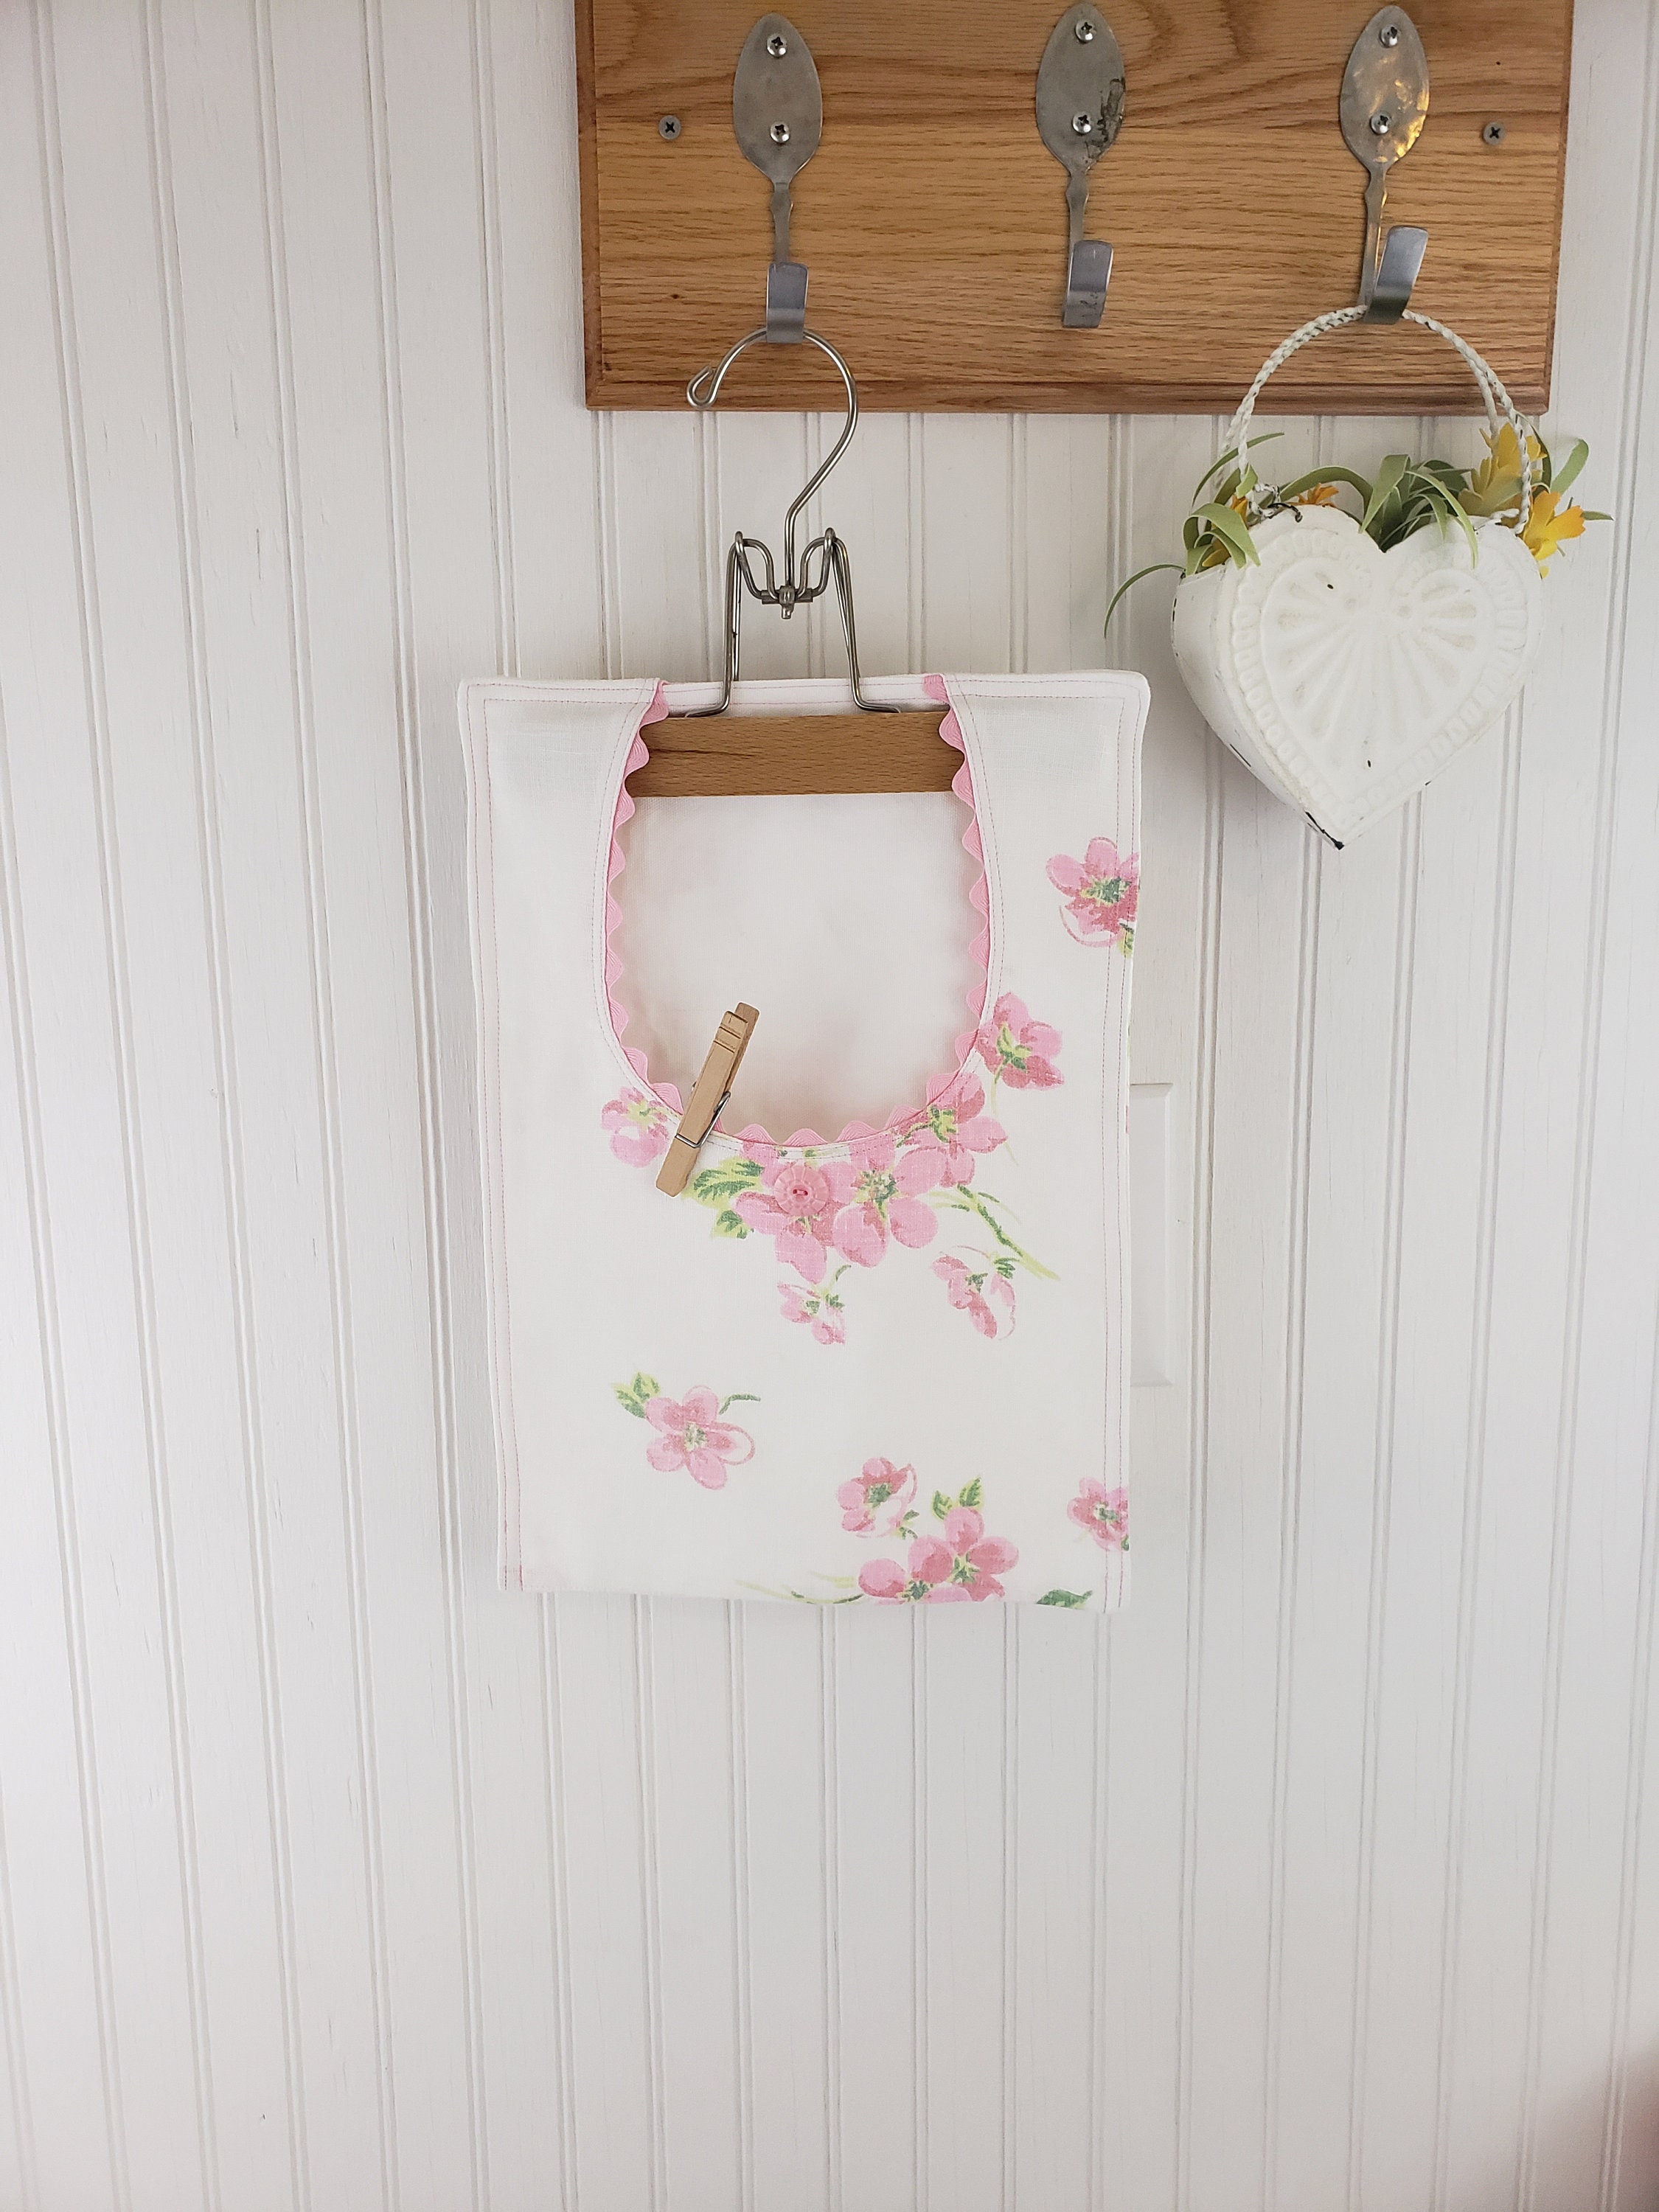 Polyester Addis Clothes Peg Bag Carrier with hanging hook 0.5 x 28 x 38 cm Petal design White Pink Blue colour 